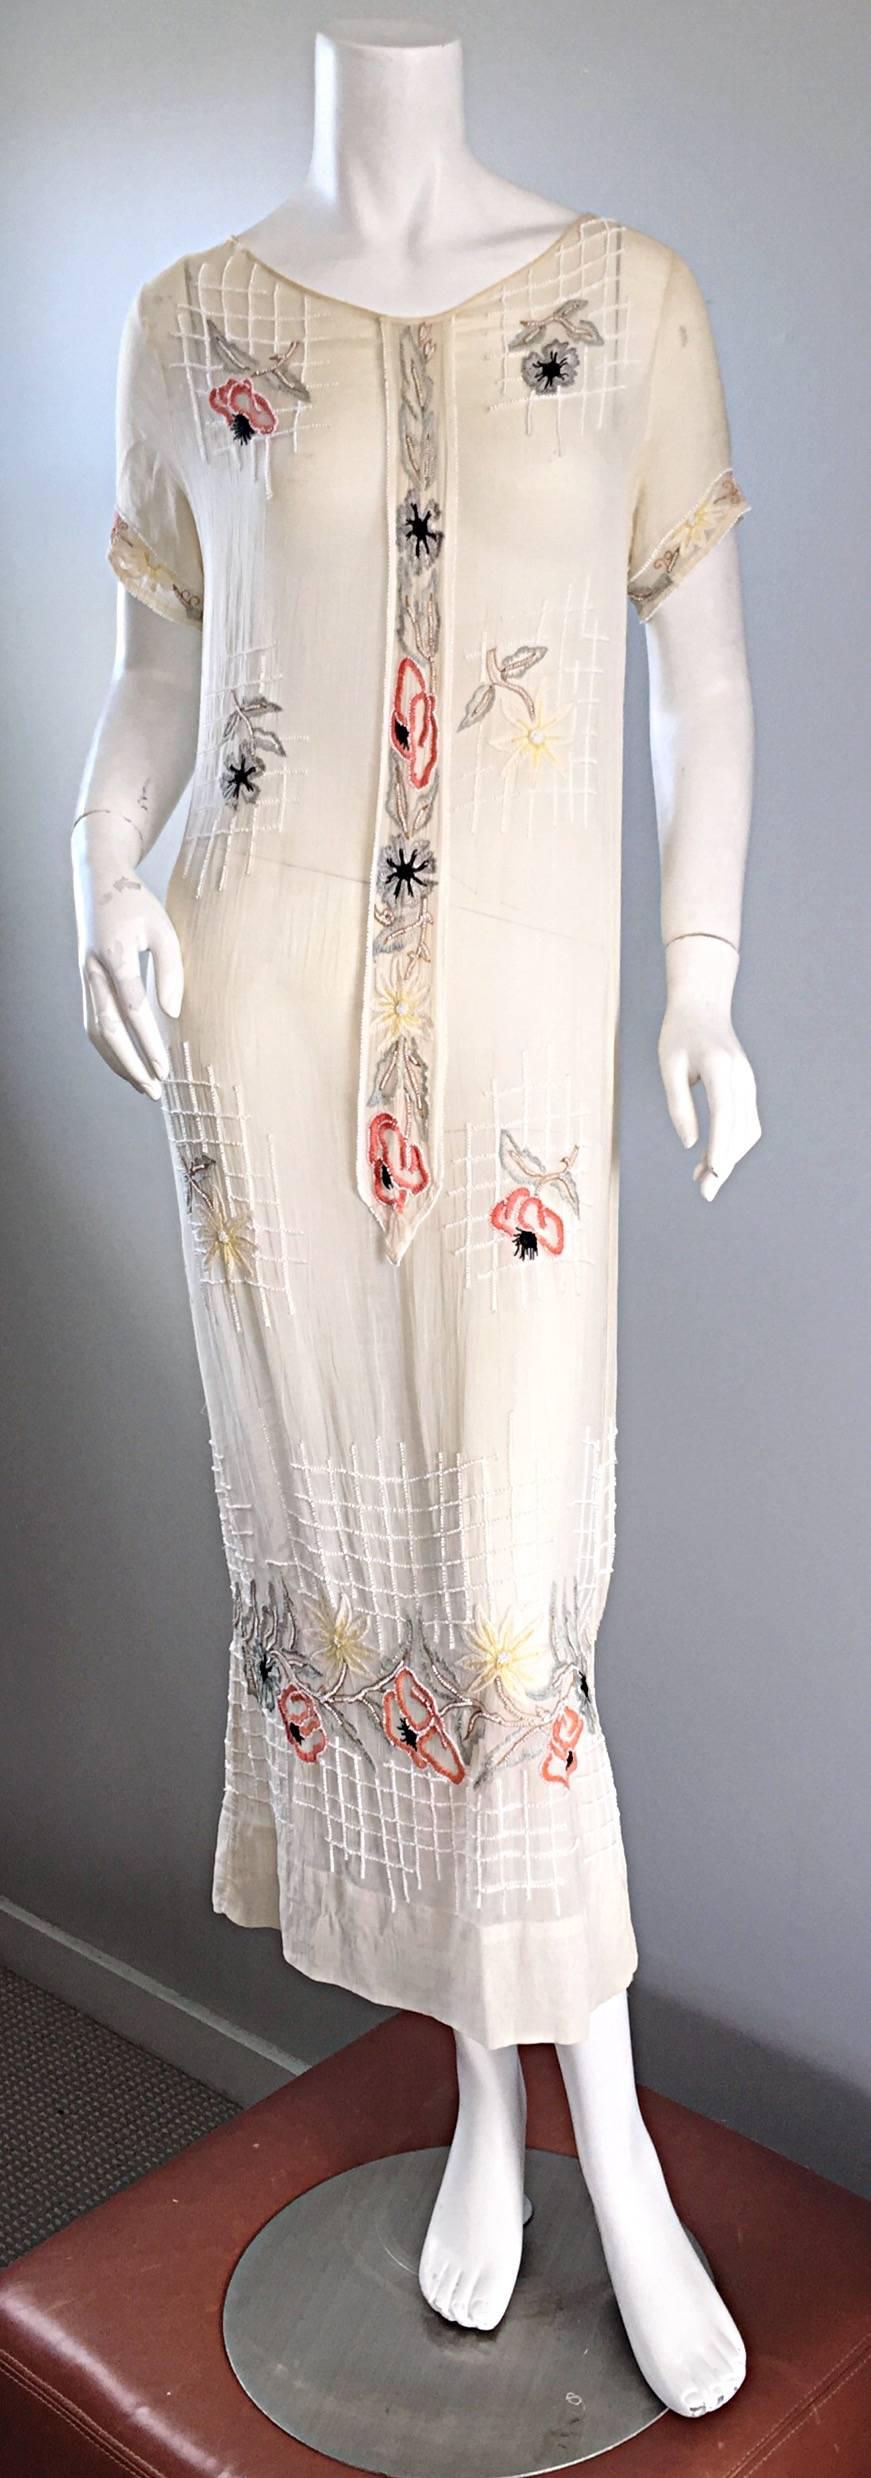 Rare 1920s B Altman Haute Couture Ivory Hand Beaded Cotton Voile Vintage Dress For Sale 1